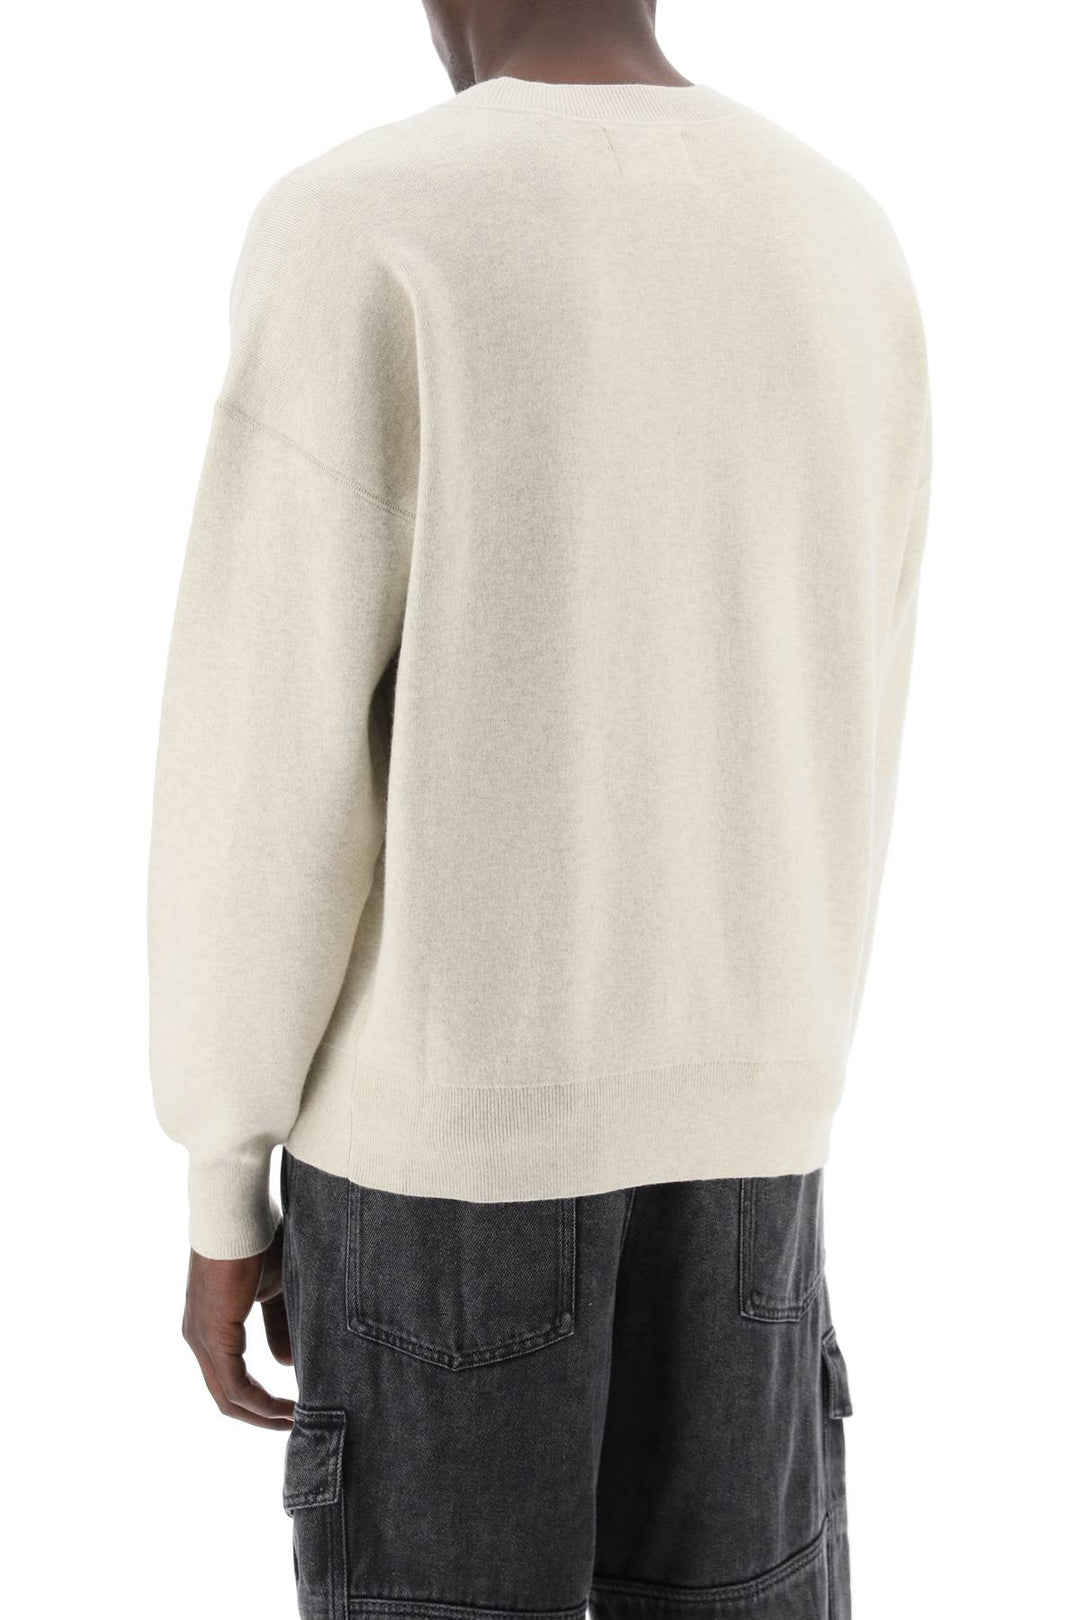 Marant Wool Cotton Atley Sweater   Neutro